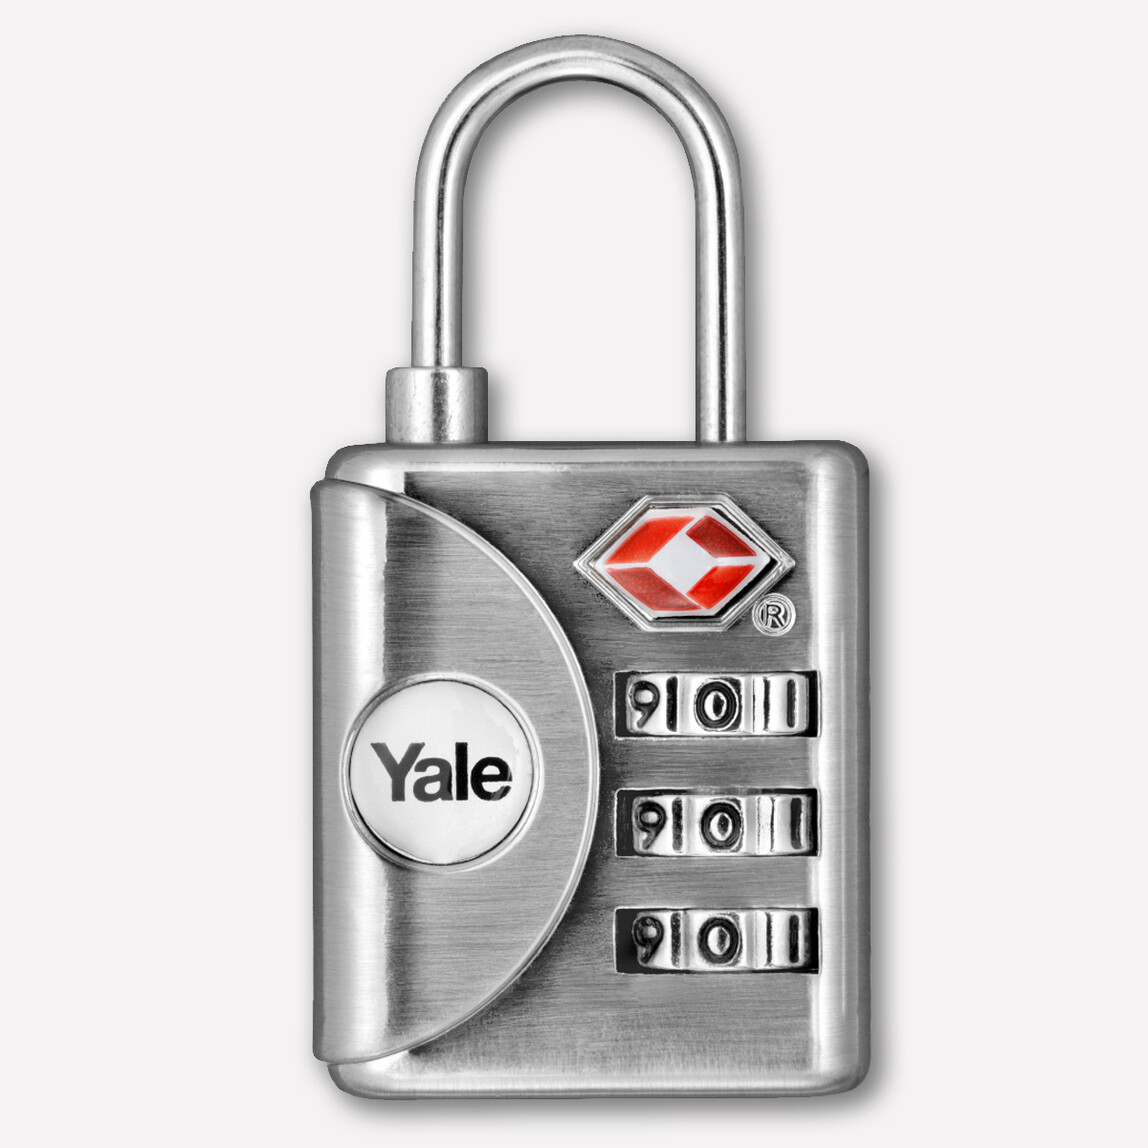    Yale TSA Onaylı Şifreli Asma Kilit   